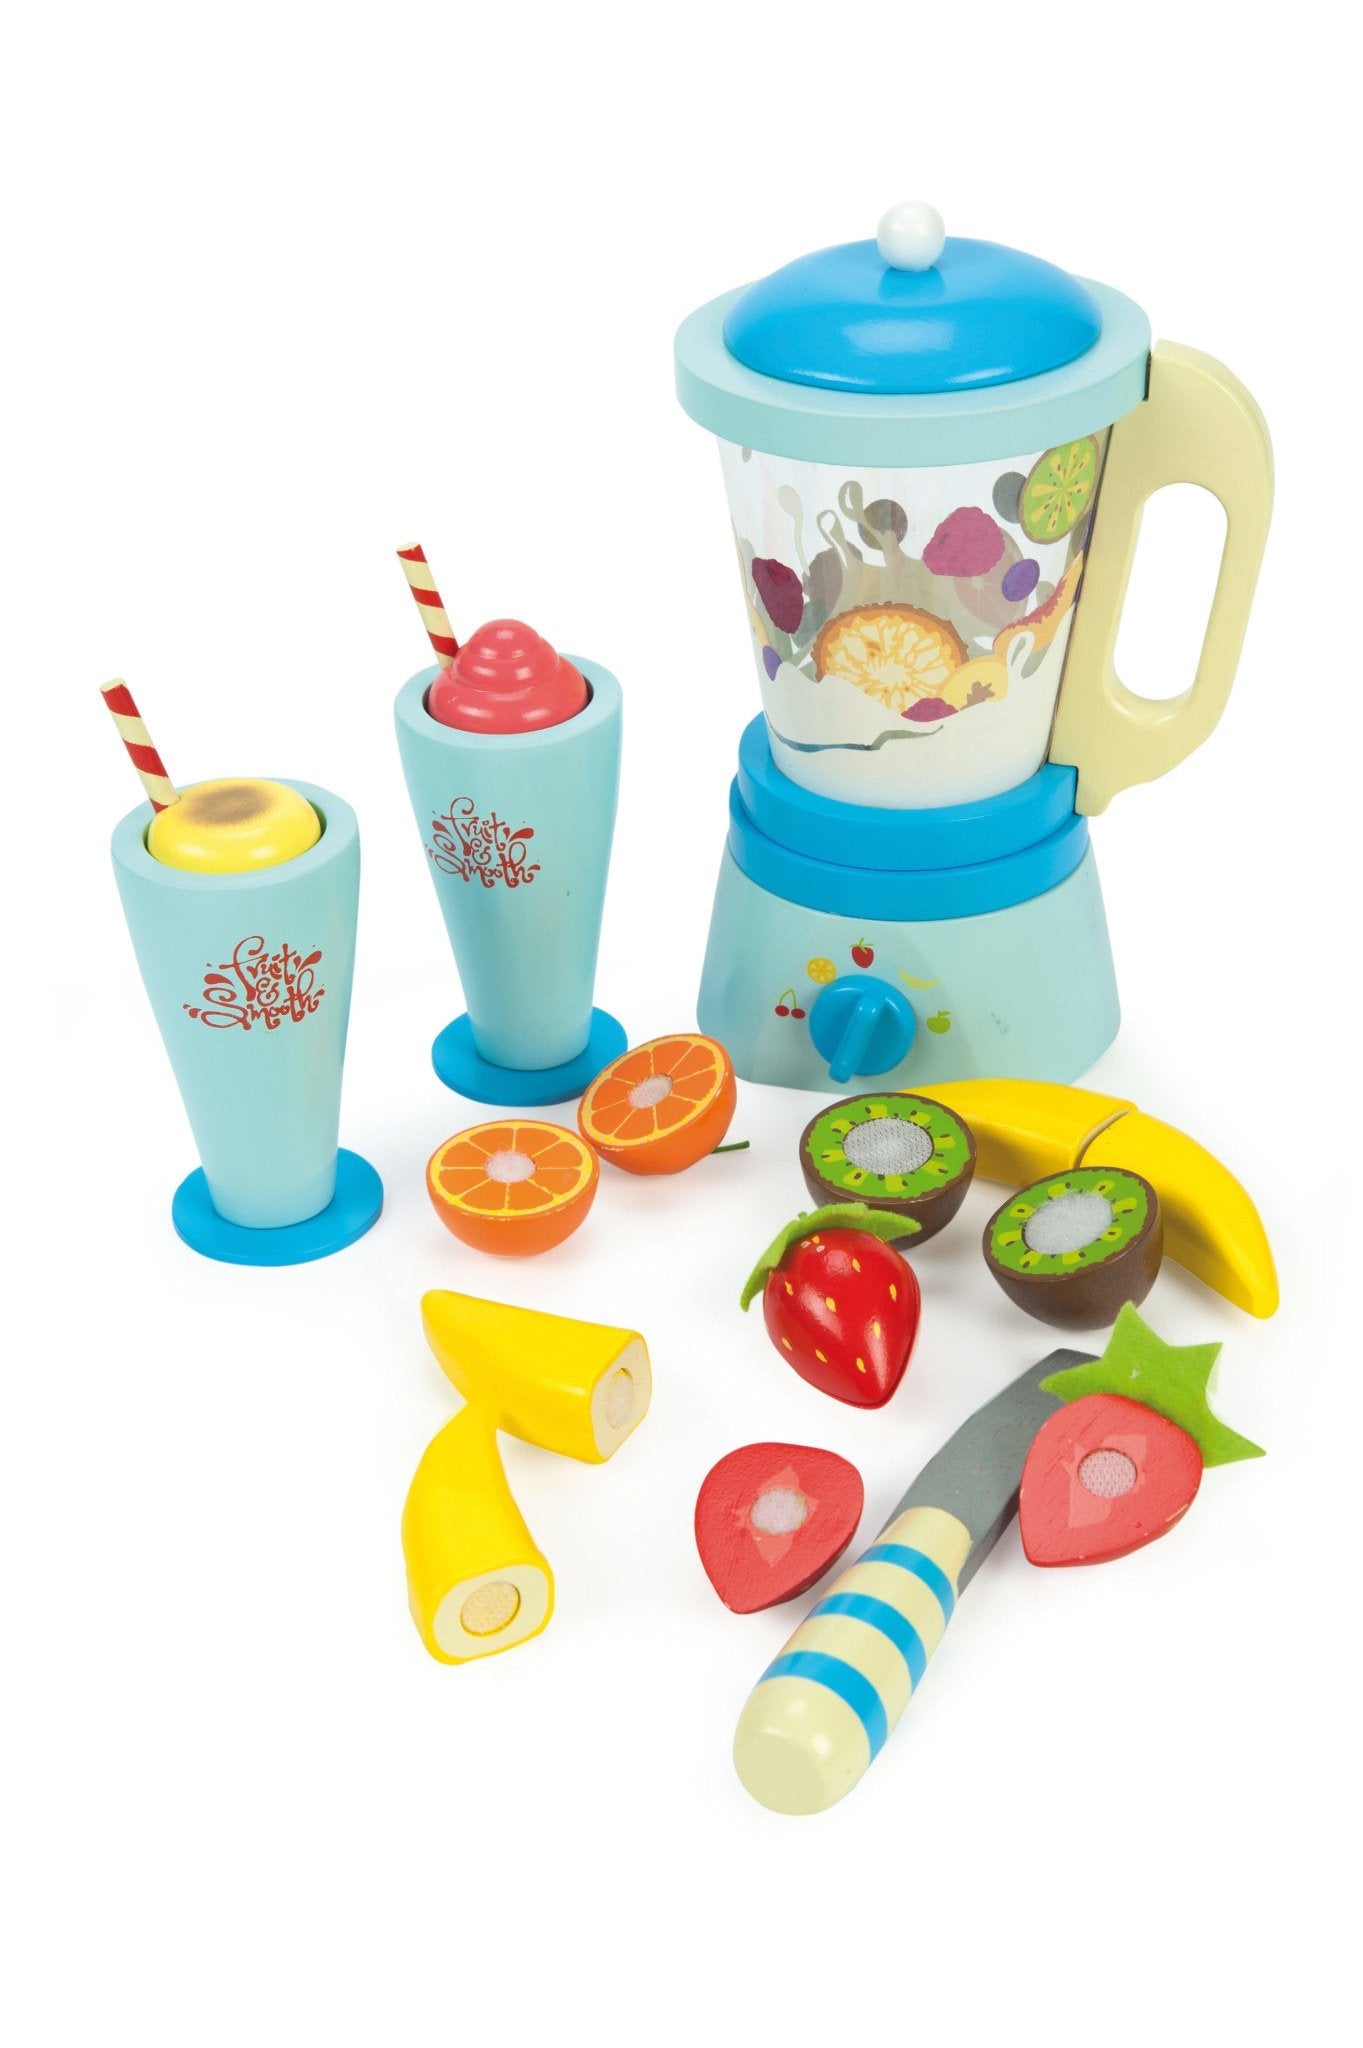 Le Toy Van - Fruit and smoothie blender set